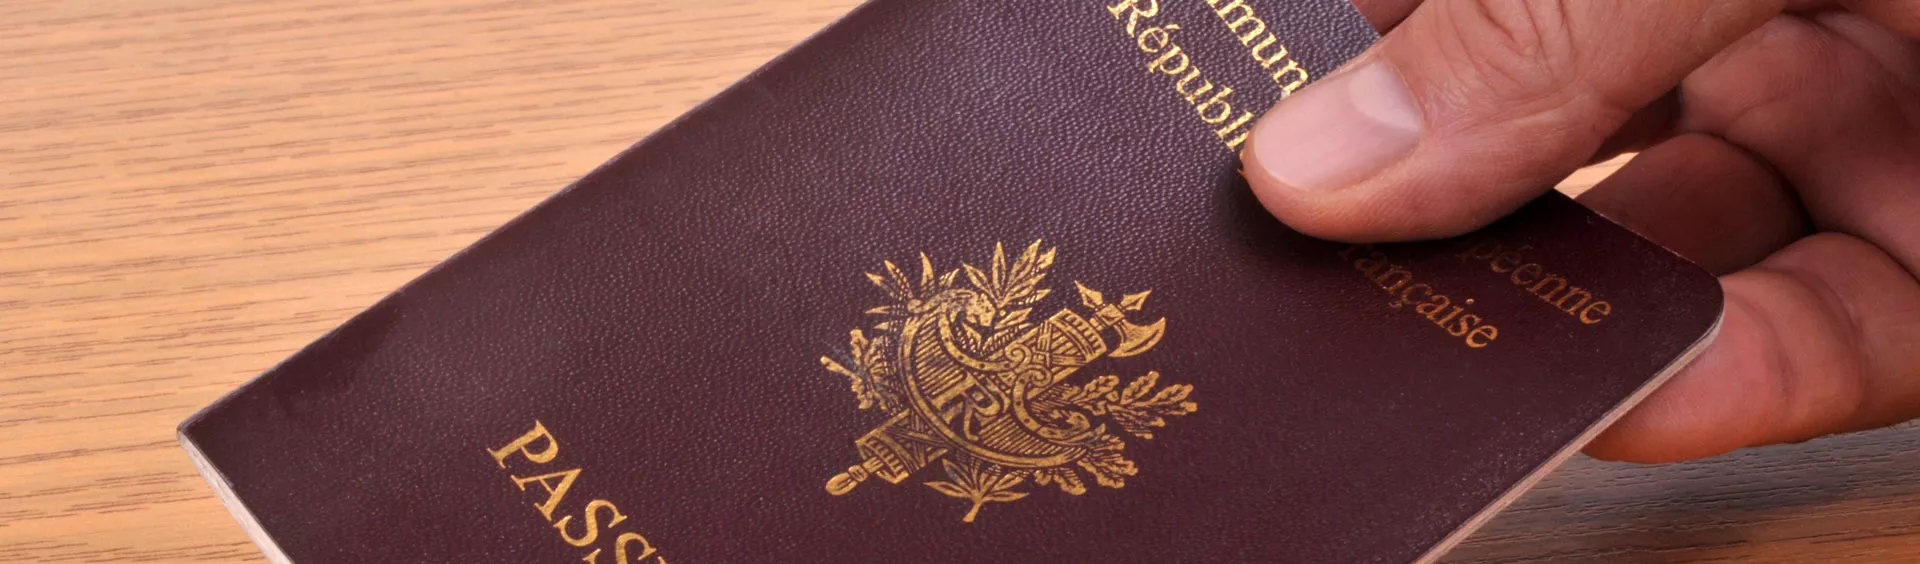 Cartes nationales et passeports © 